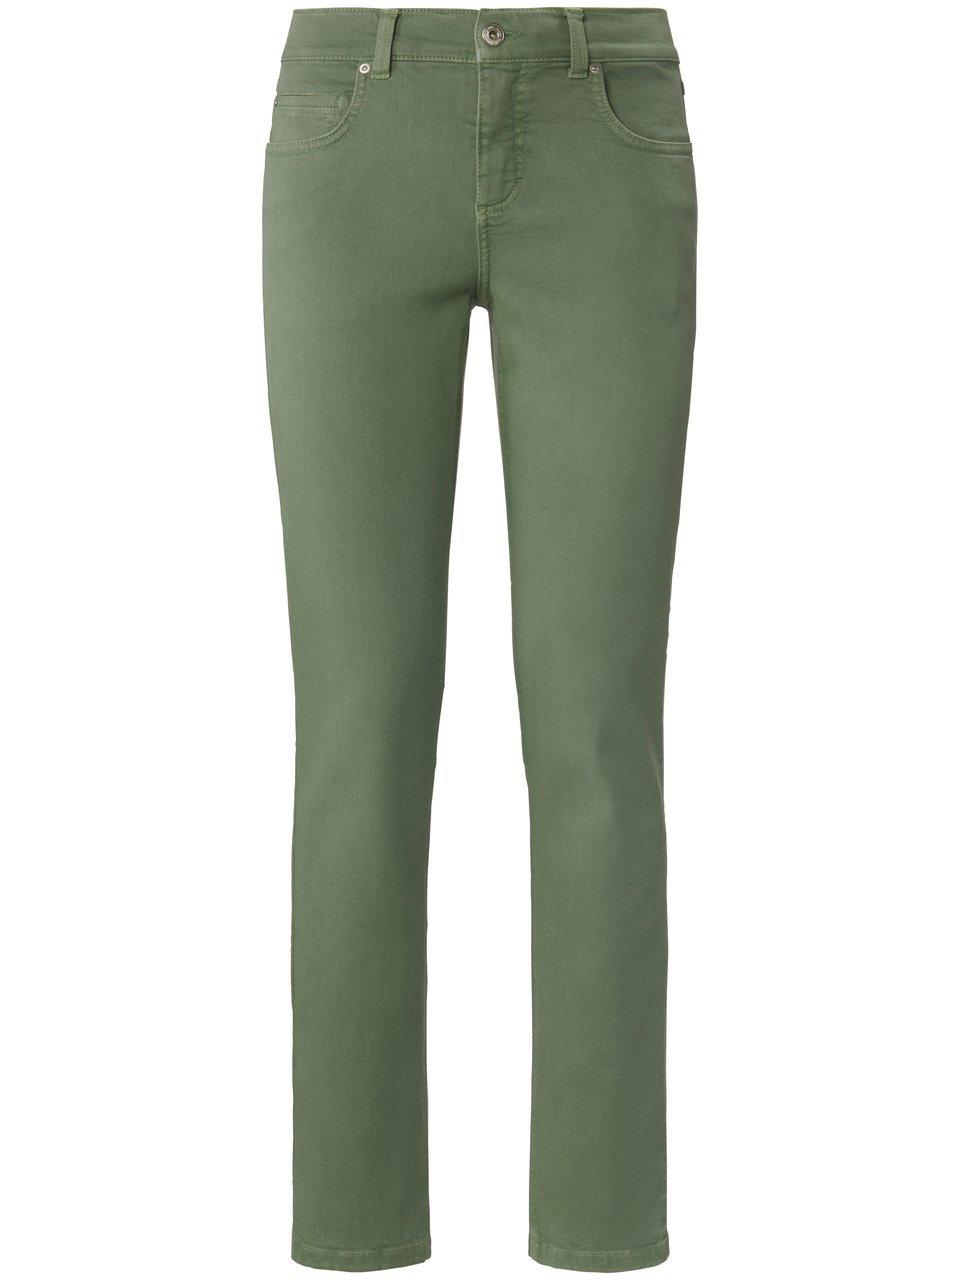 Jeans Van ANGELS groen